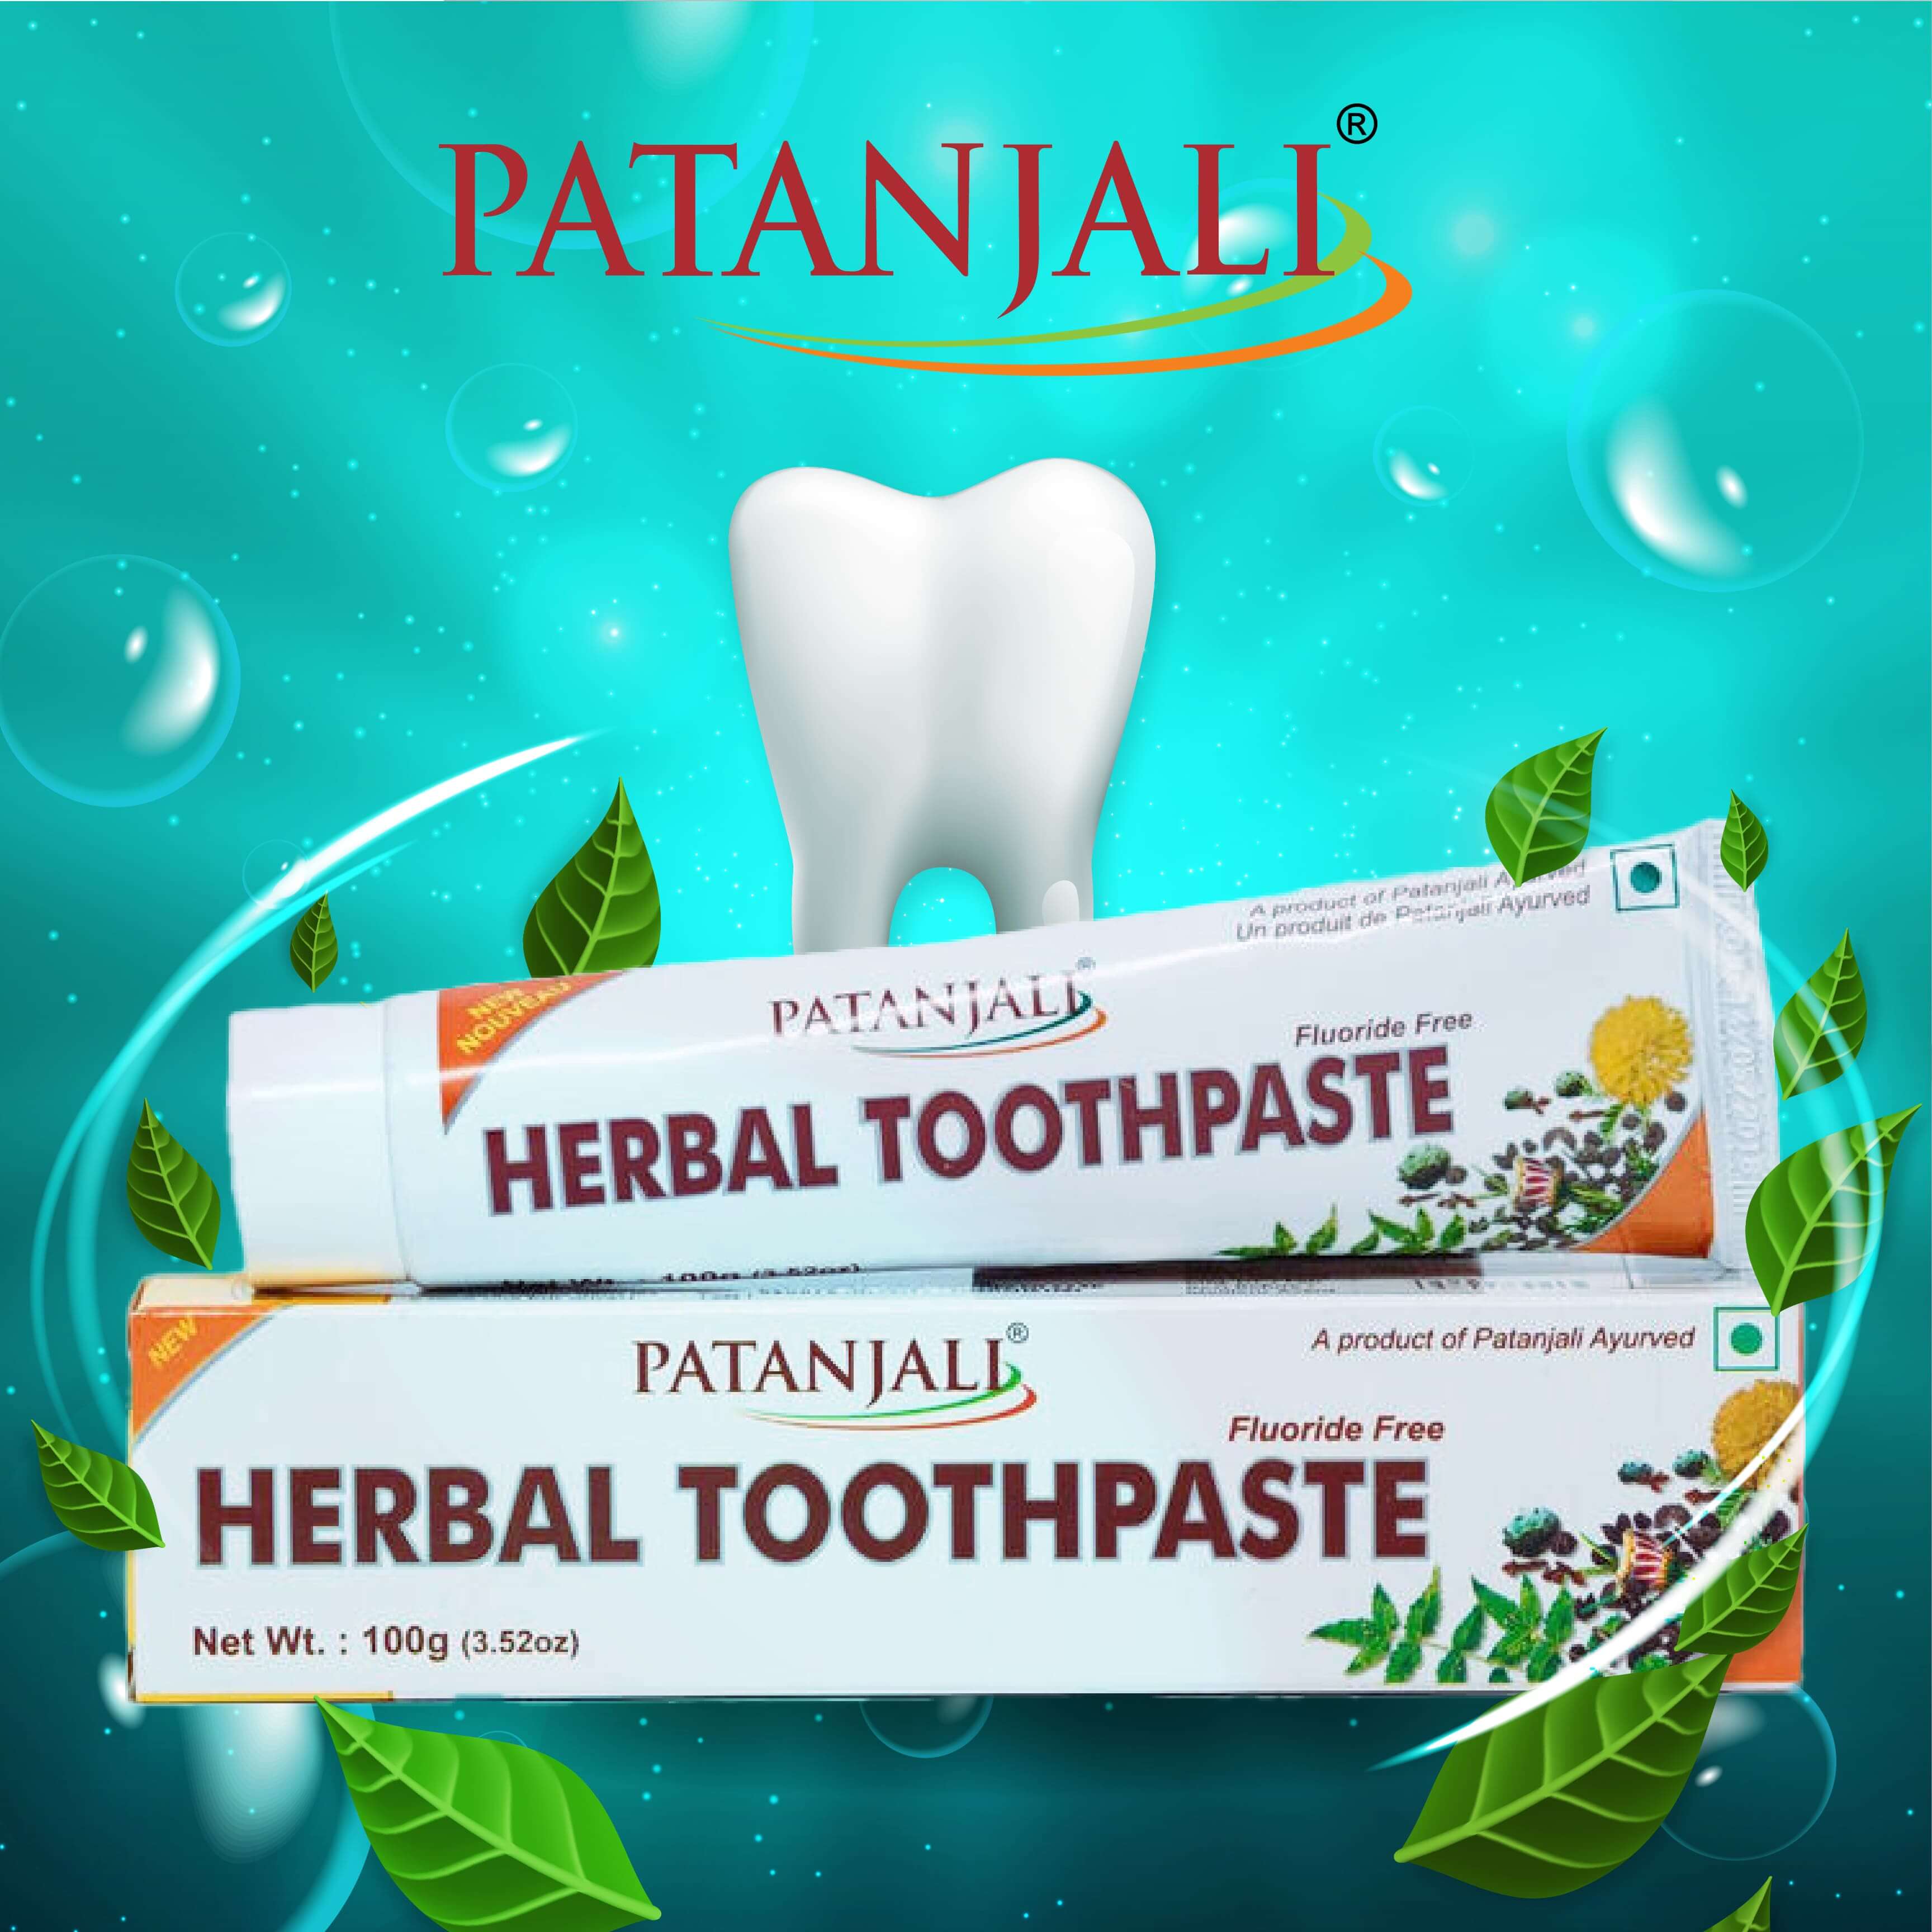 Patanjali Herbal Toothpaste